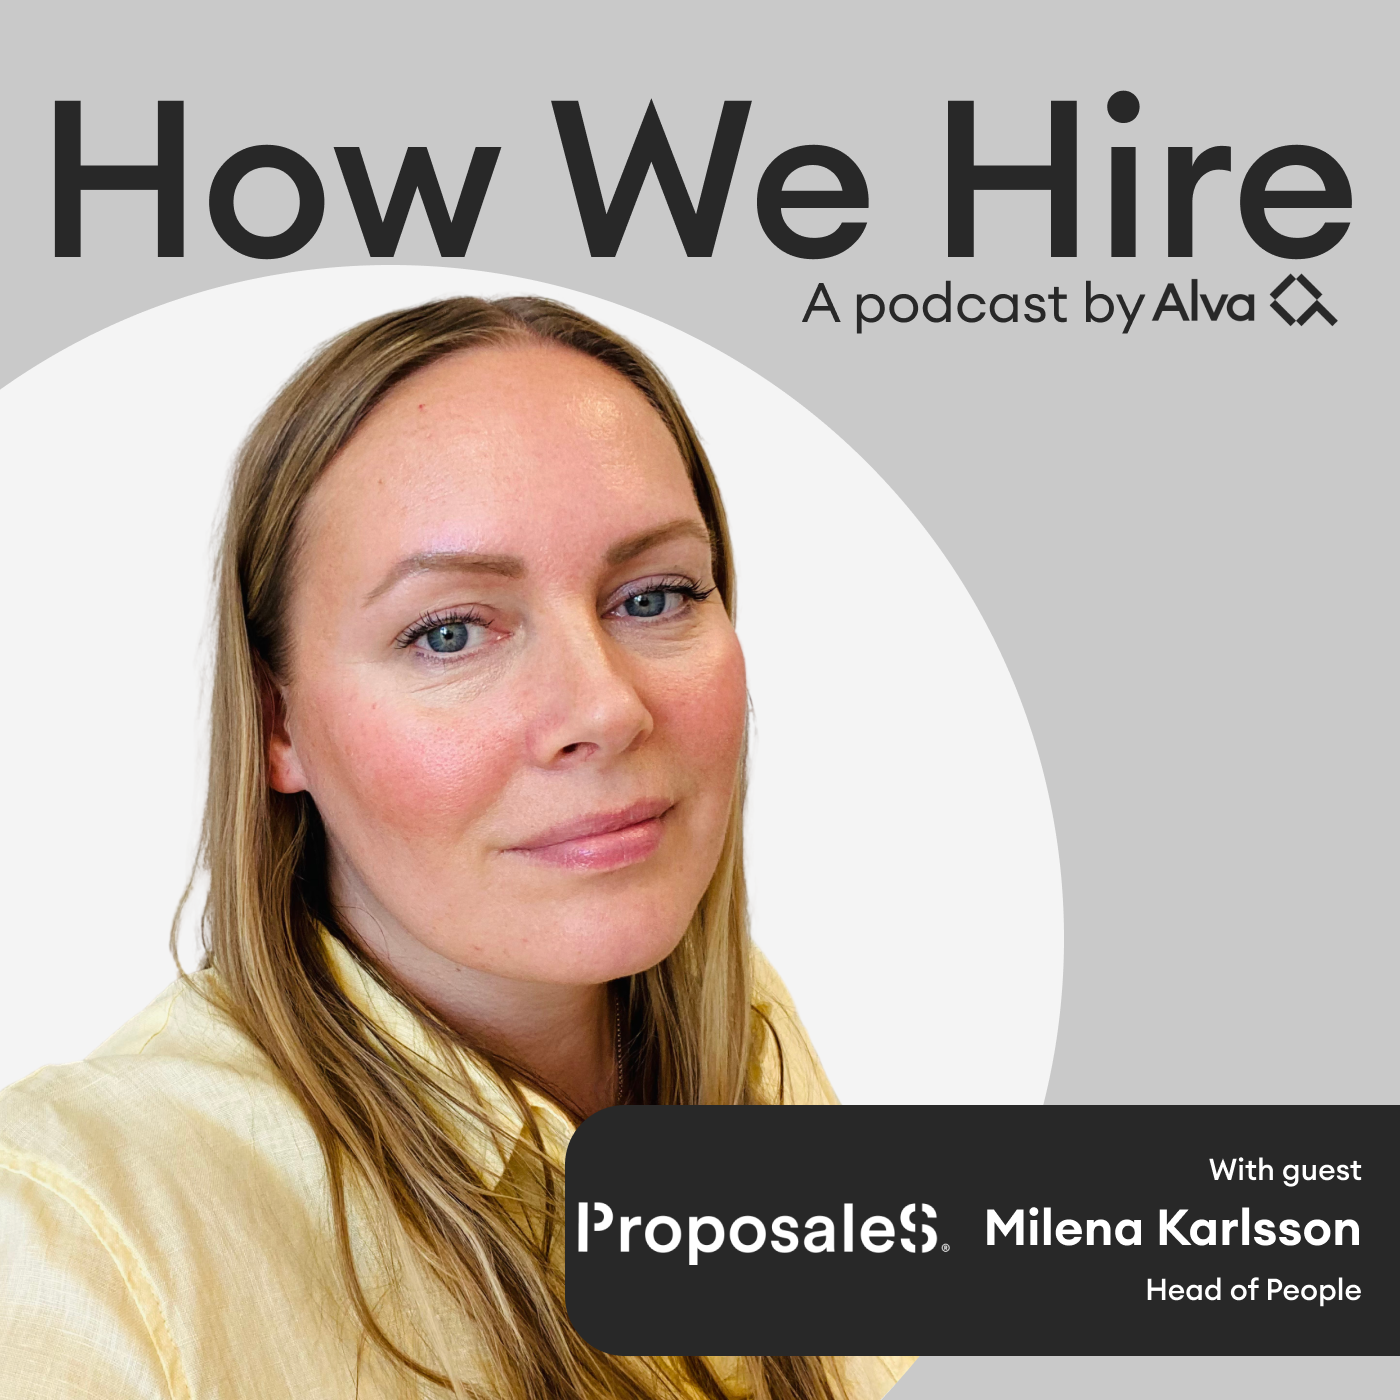 Milena Karlsson on building a data-driven recruitment process